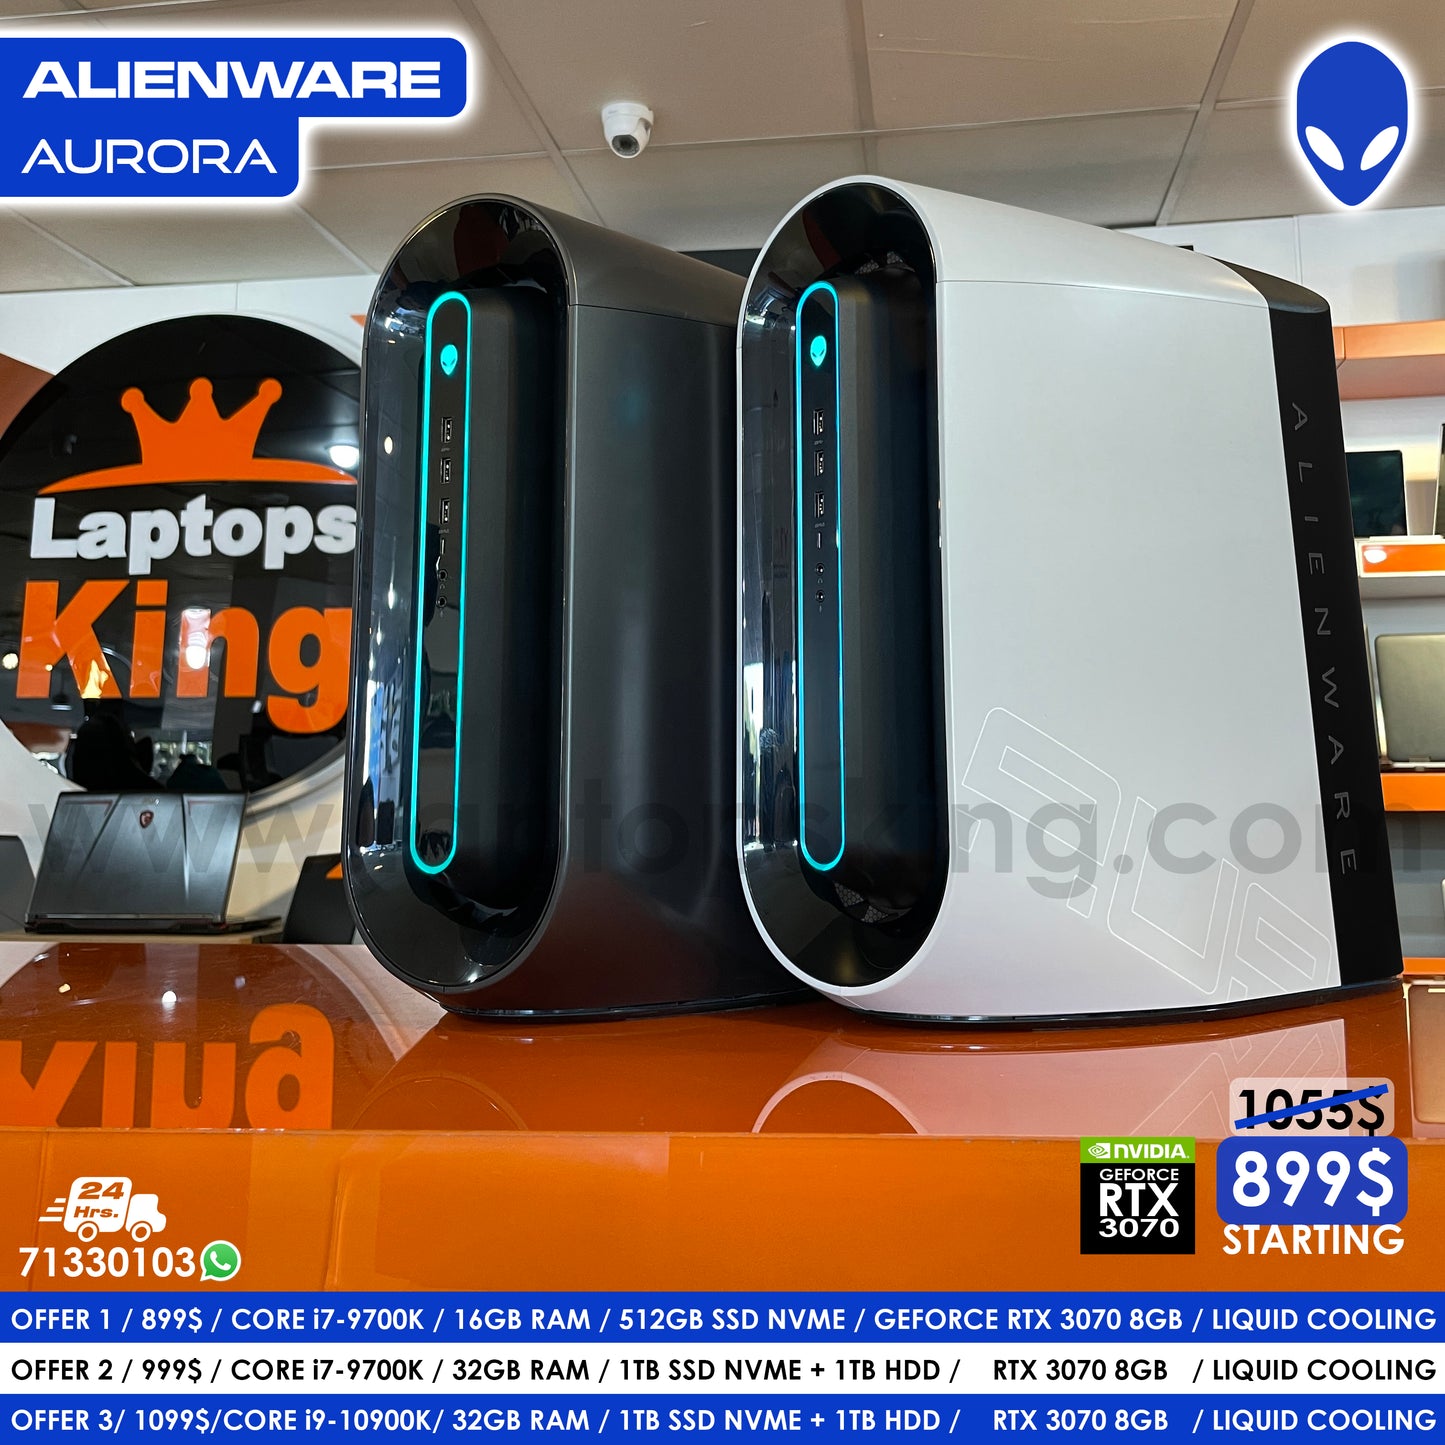 Alienware Aurora Rtx 3070 Liquid Cooling Gaming Desktops (Open Box)